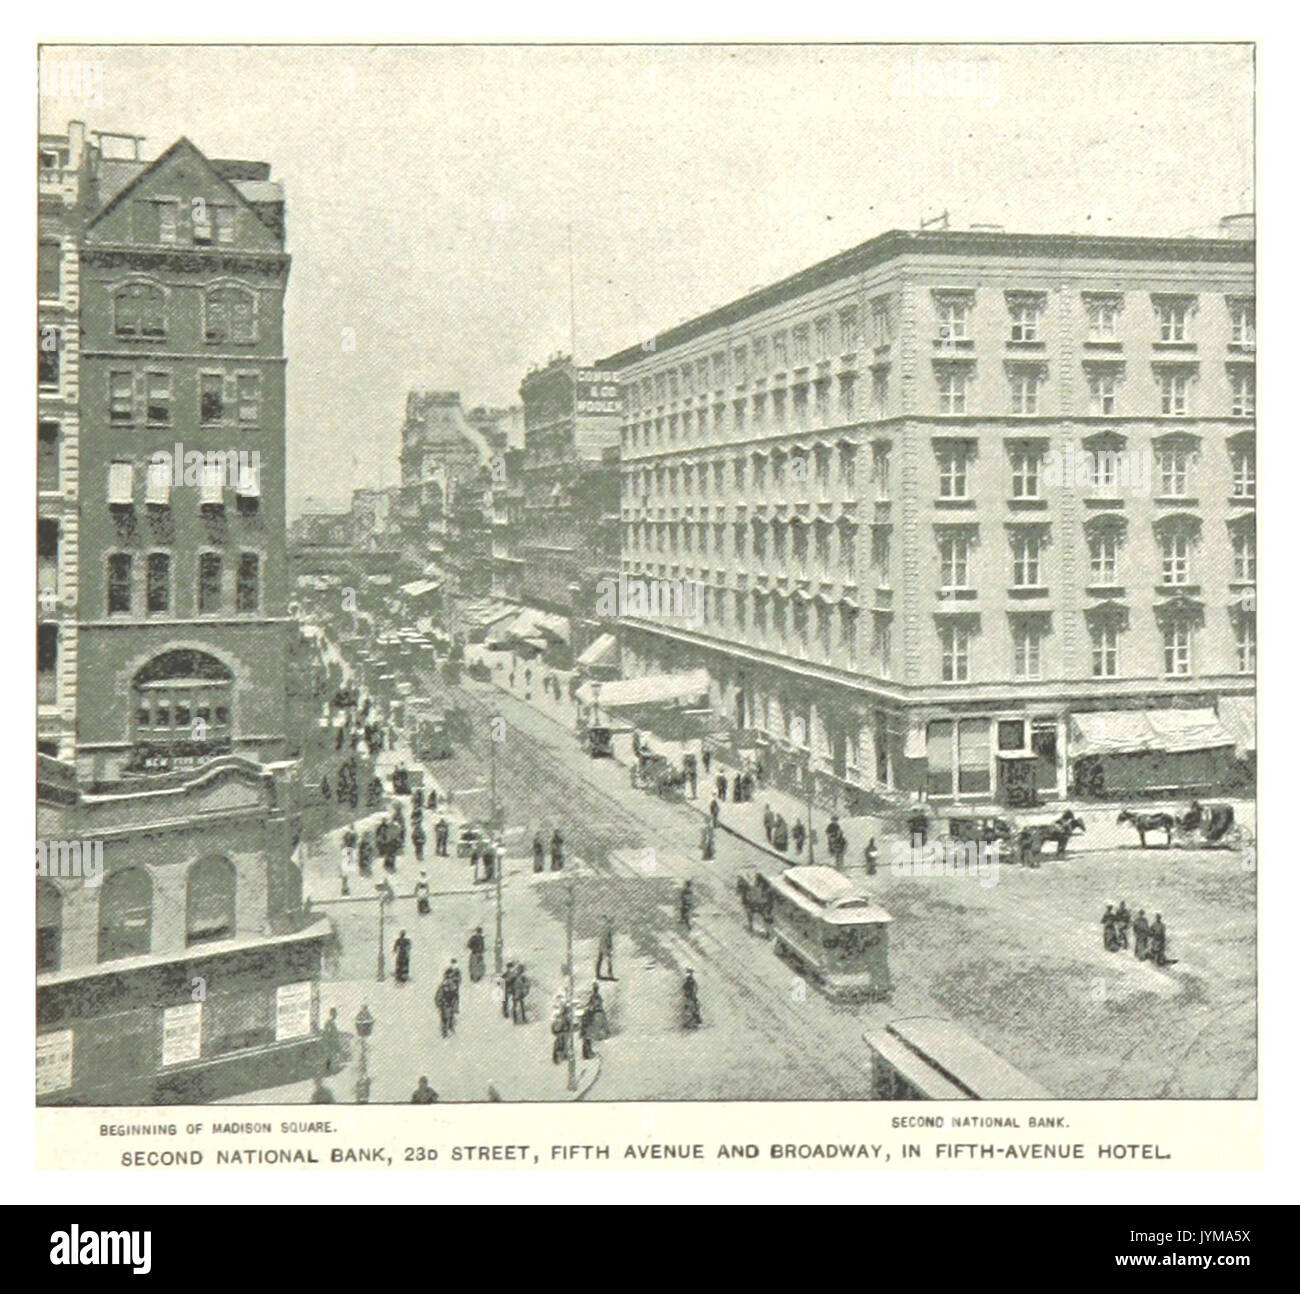 (König 1893, NYC) pg 743 ZWEITE NATIONALE BANK, 230 Street, Fifth Avenue und Broadway, IN FIFTH AVENUE HOTEL Stockfoto